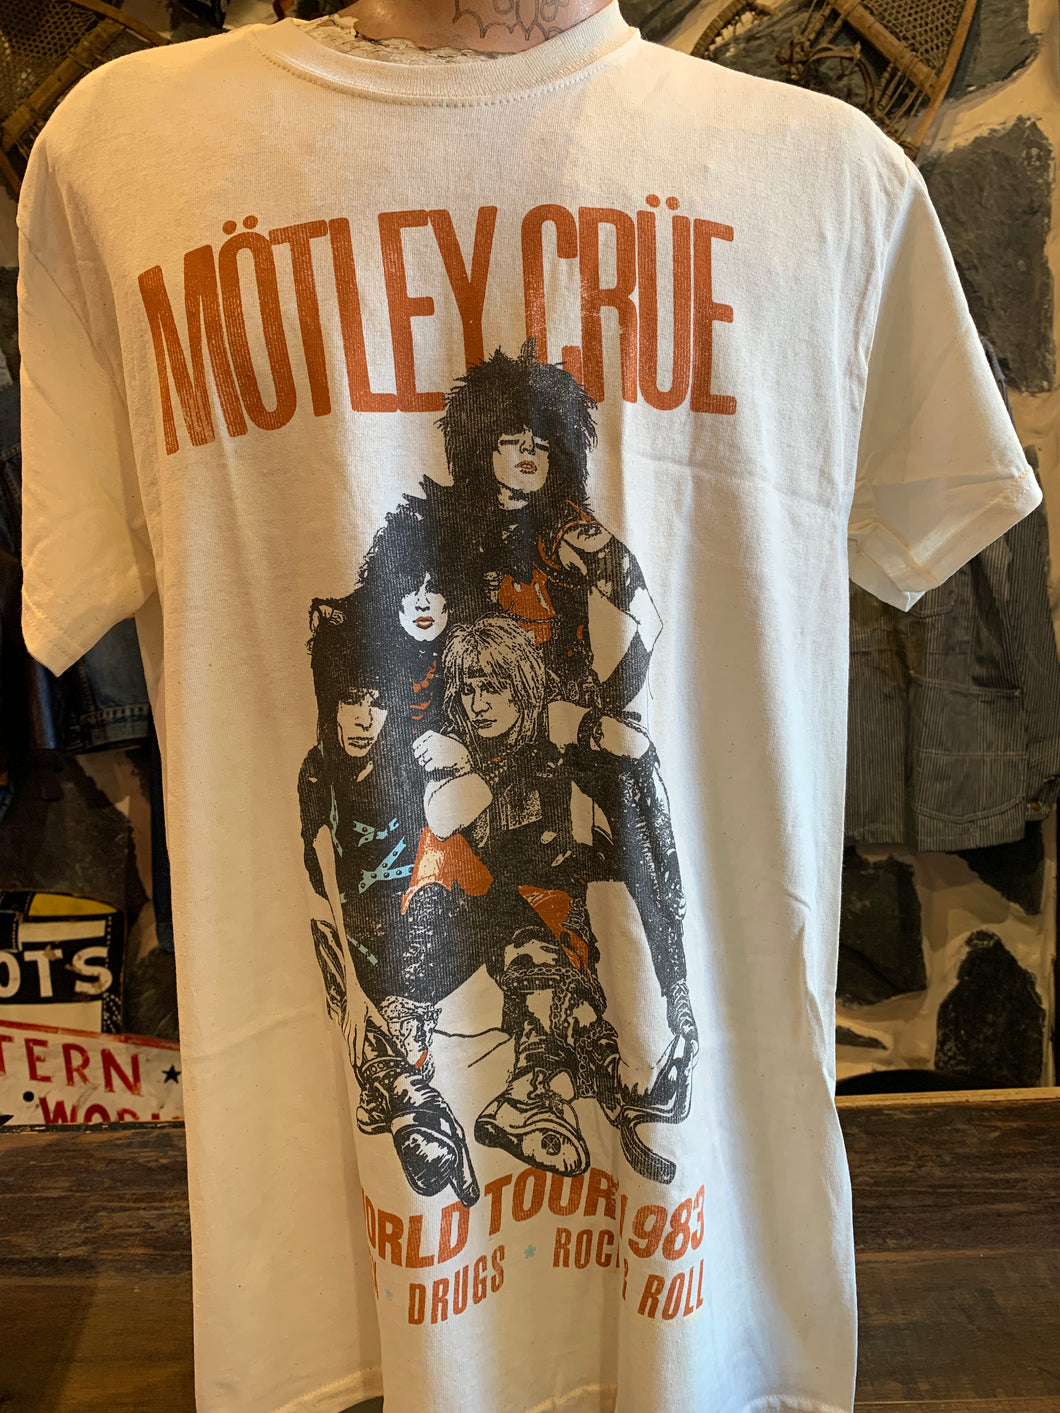 Motley Crue, World Tour 1983